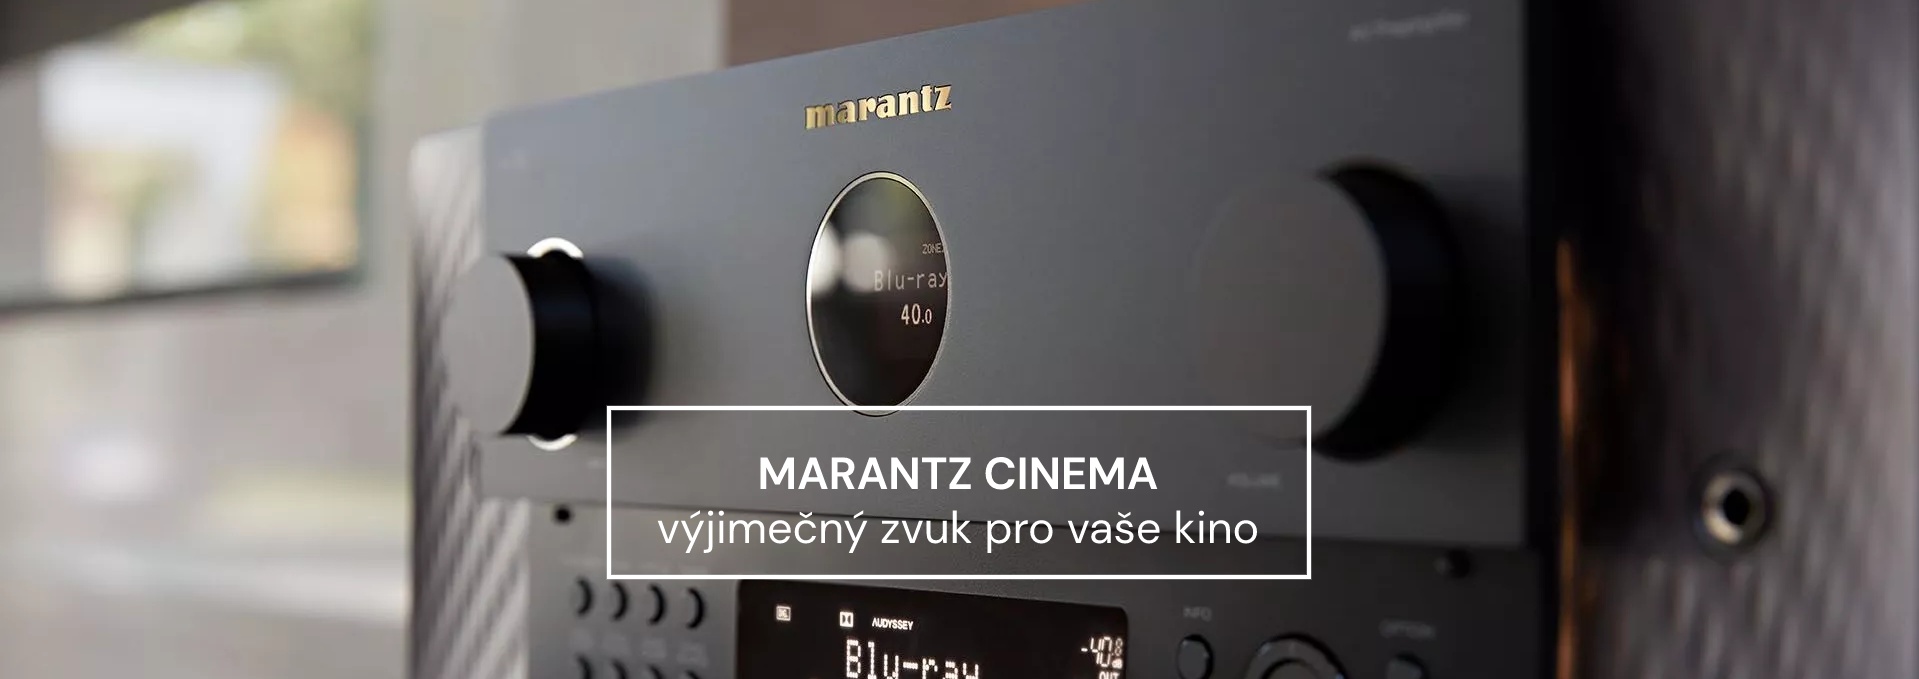 Marantz CINEMA